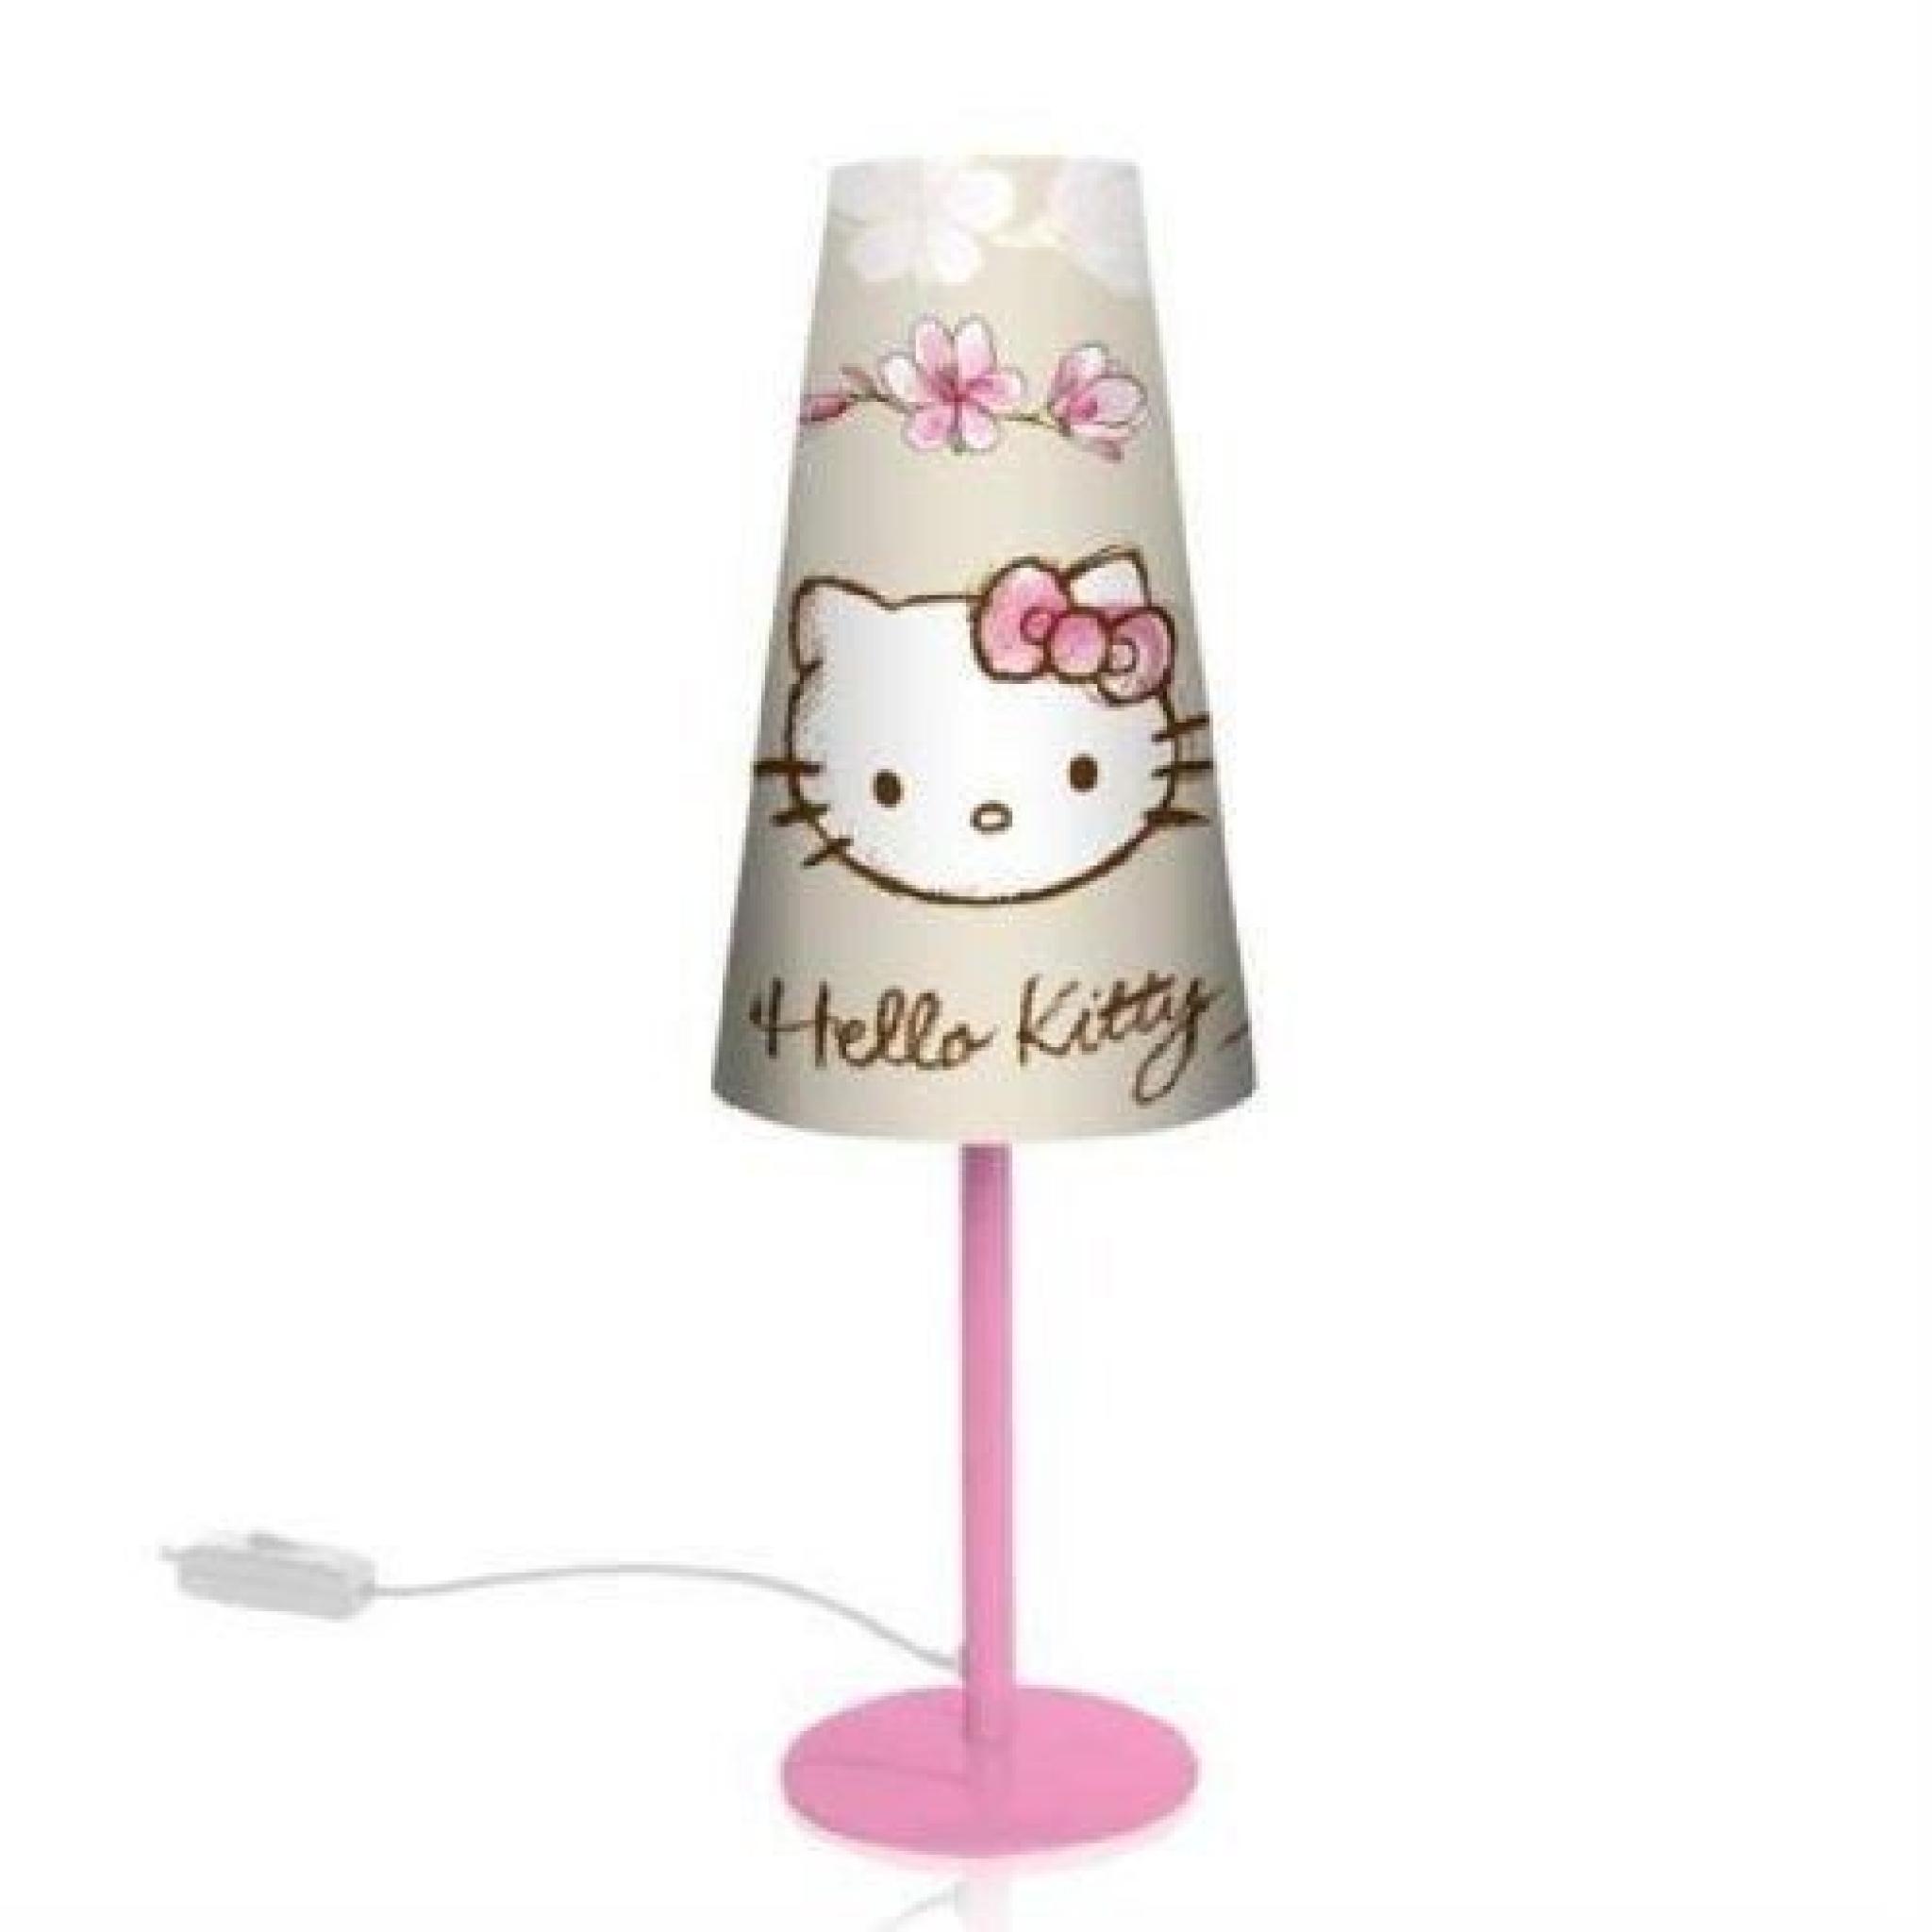 HELLO KITTY LAMPE A POSER ENFANT METAL / PLASTIQUE